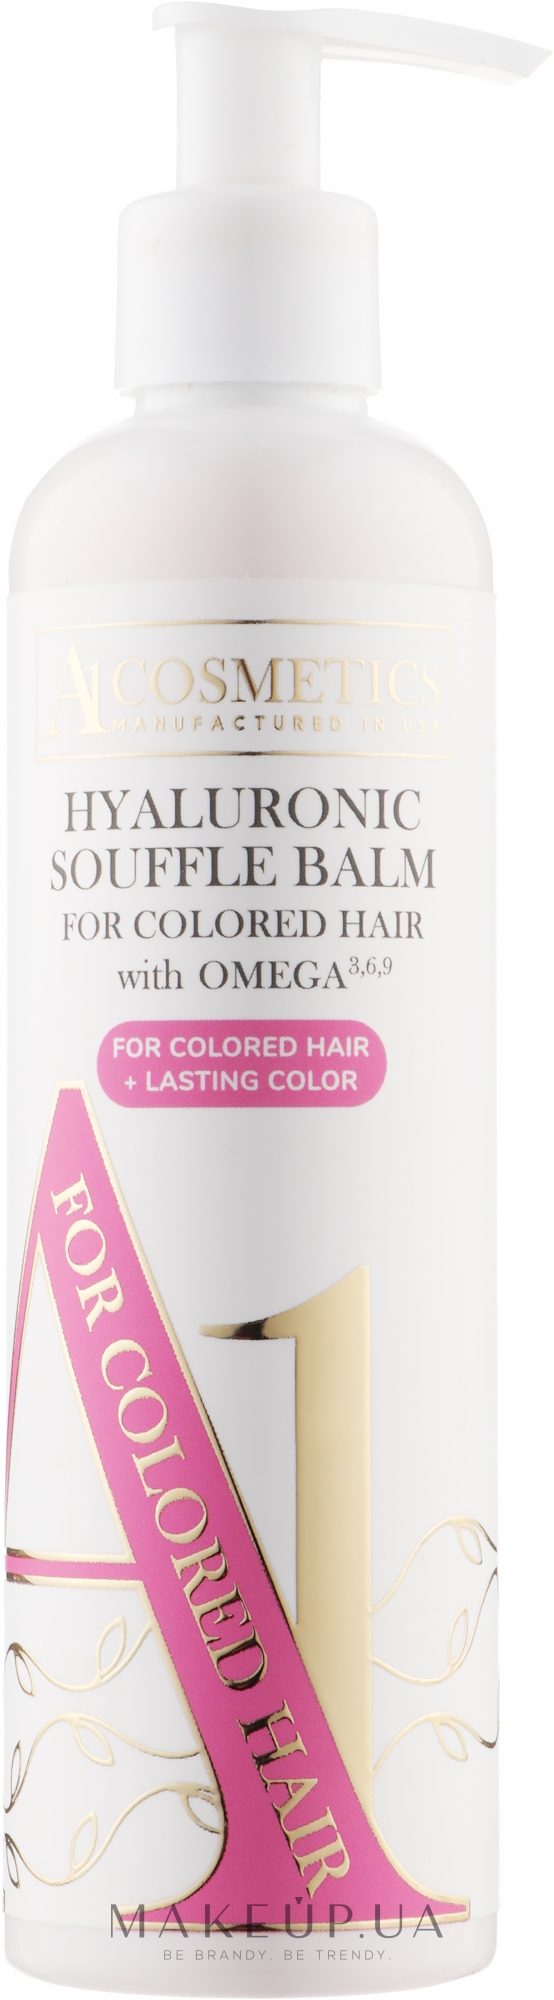 Гиалуроновый бальзам-суфле для окрашенных волос - A1 Cosmetics For Colored Hair Hyaluronic Souffle Balm With Omega 3-6-9 + Lasting Color — фото 250ml